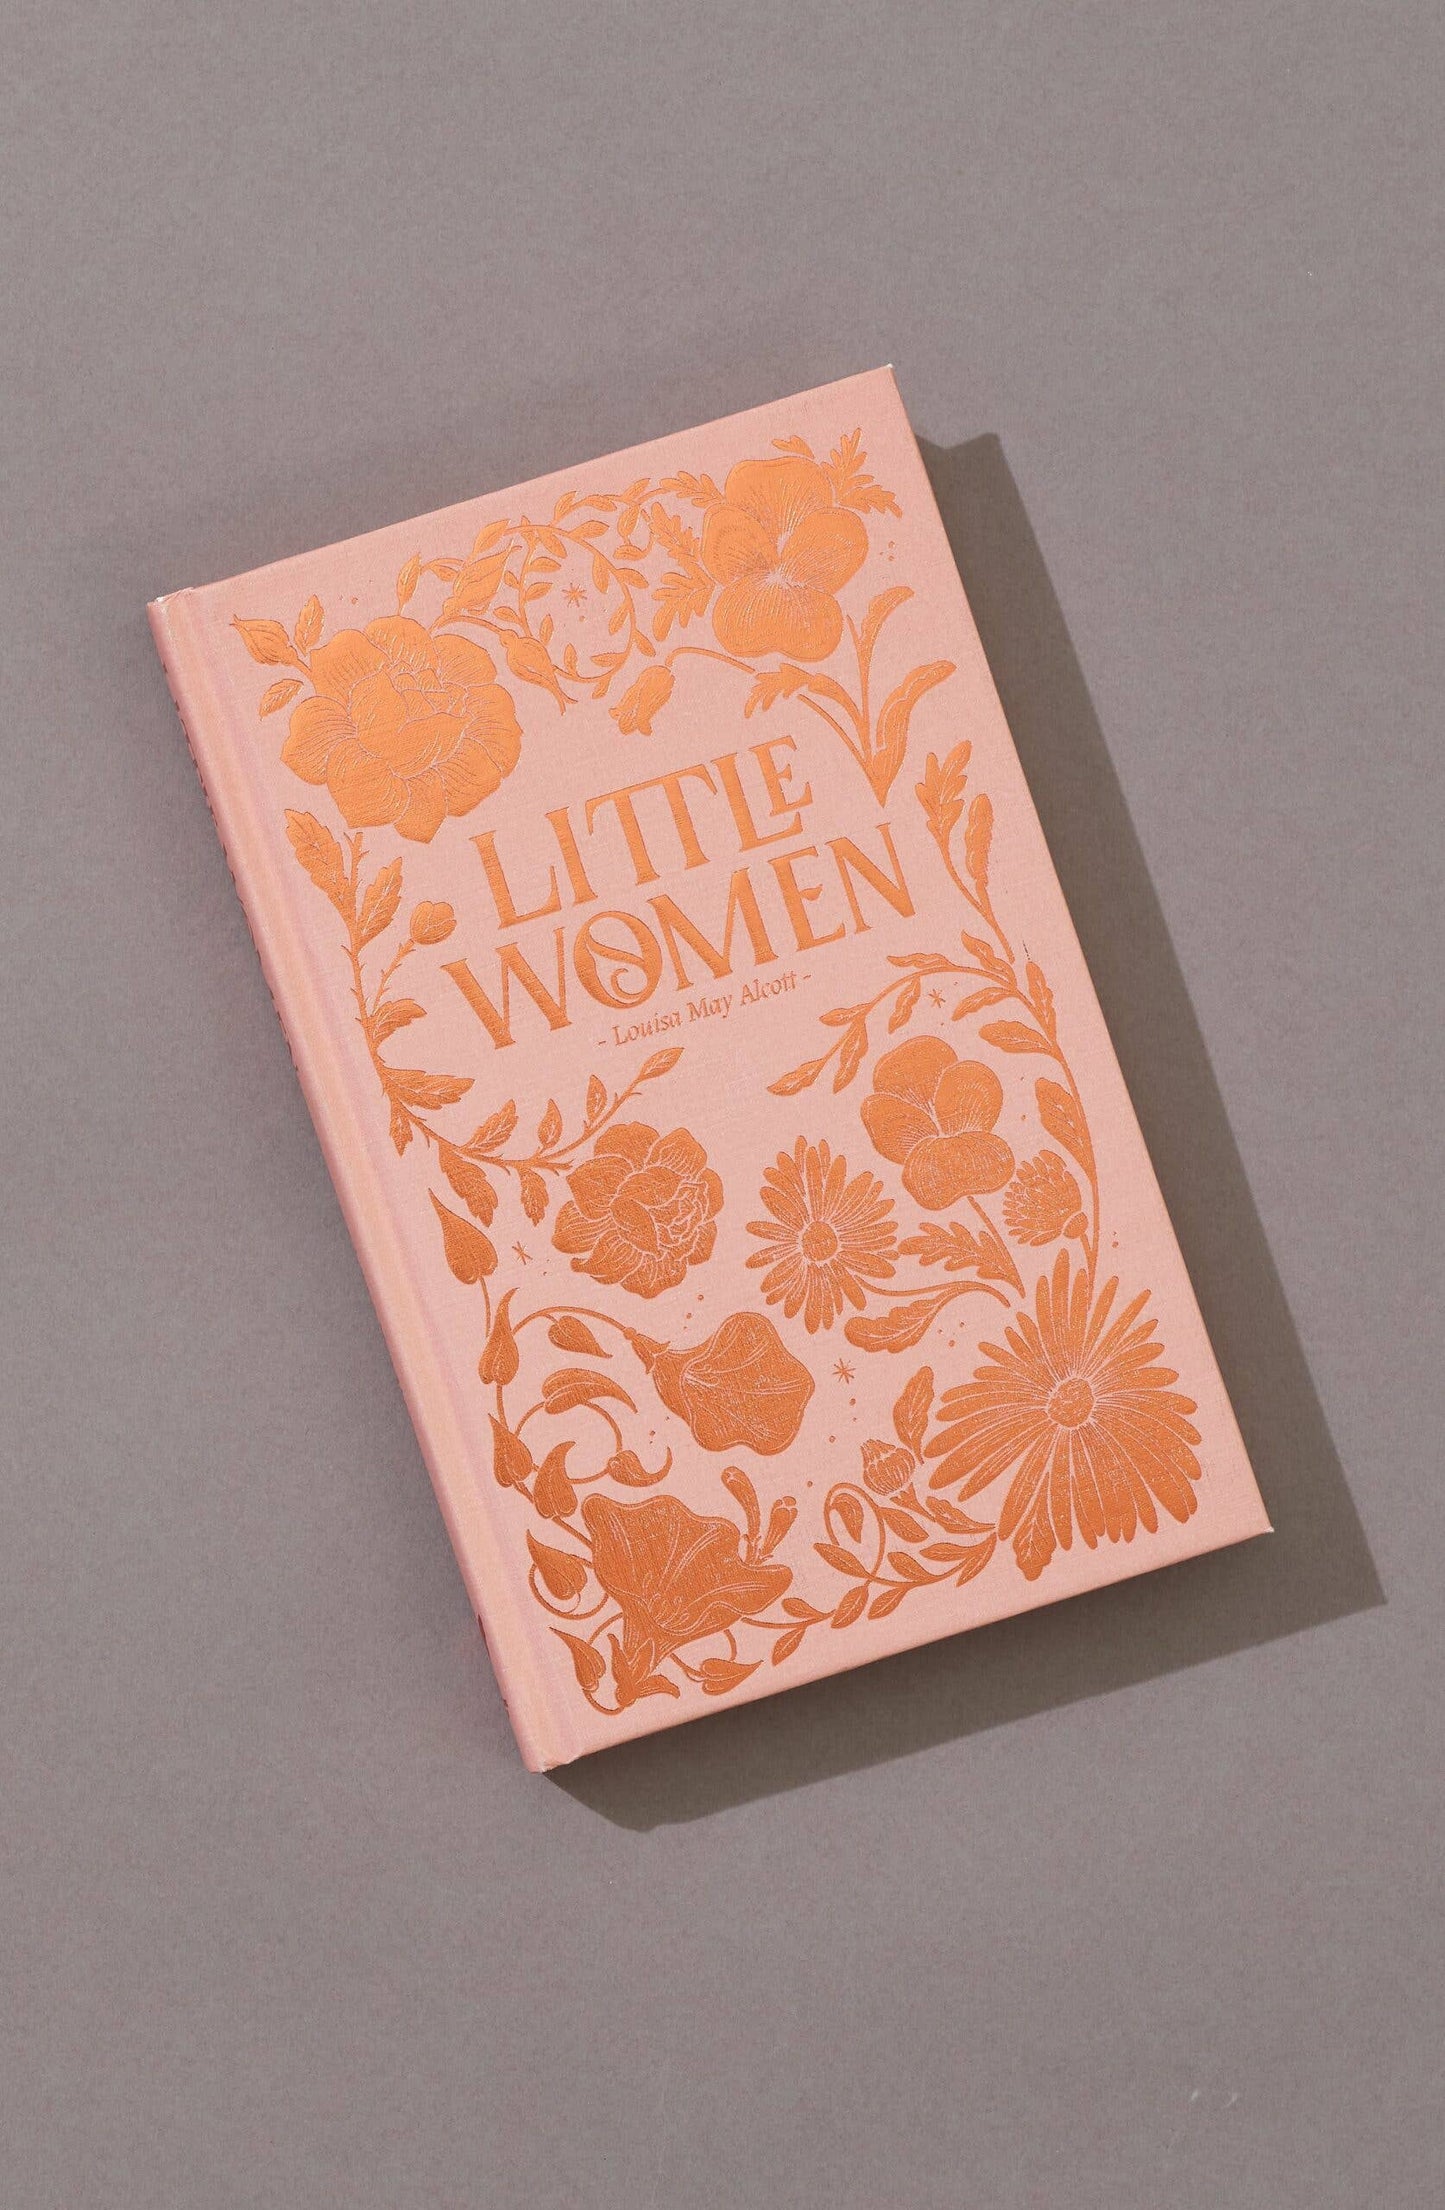 Little Women | Luxe Edition | Wordsworth Classics